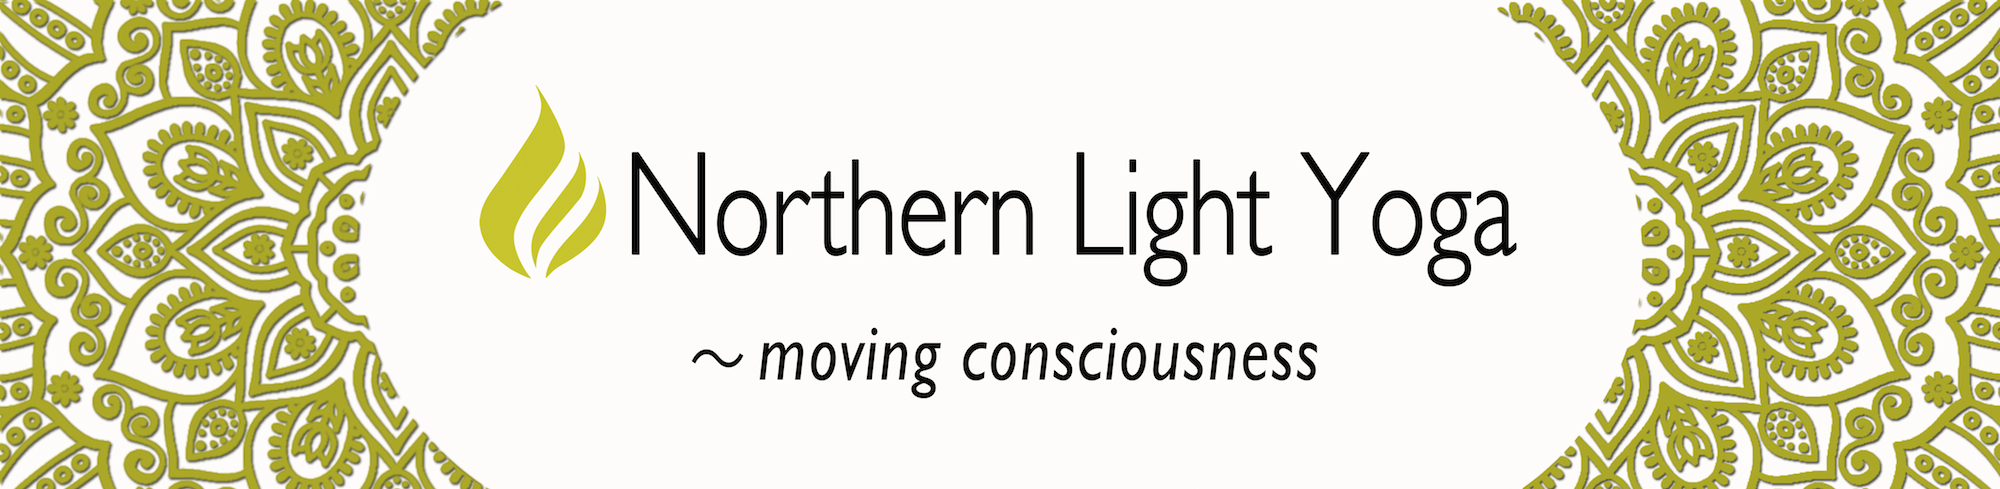 northern light yoga oslo